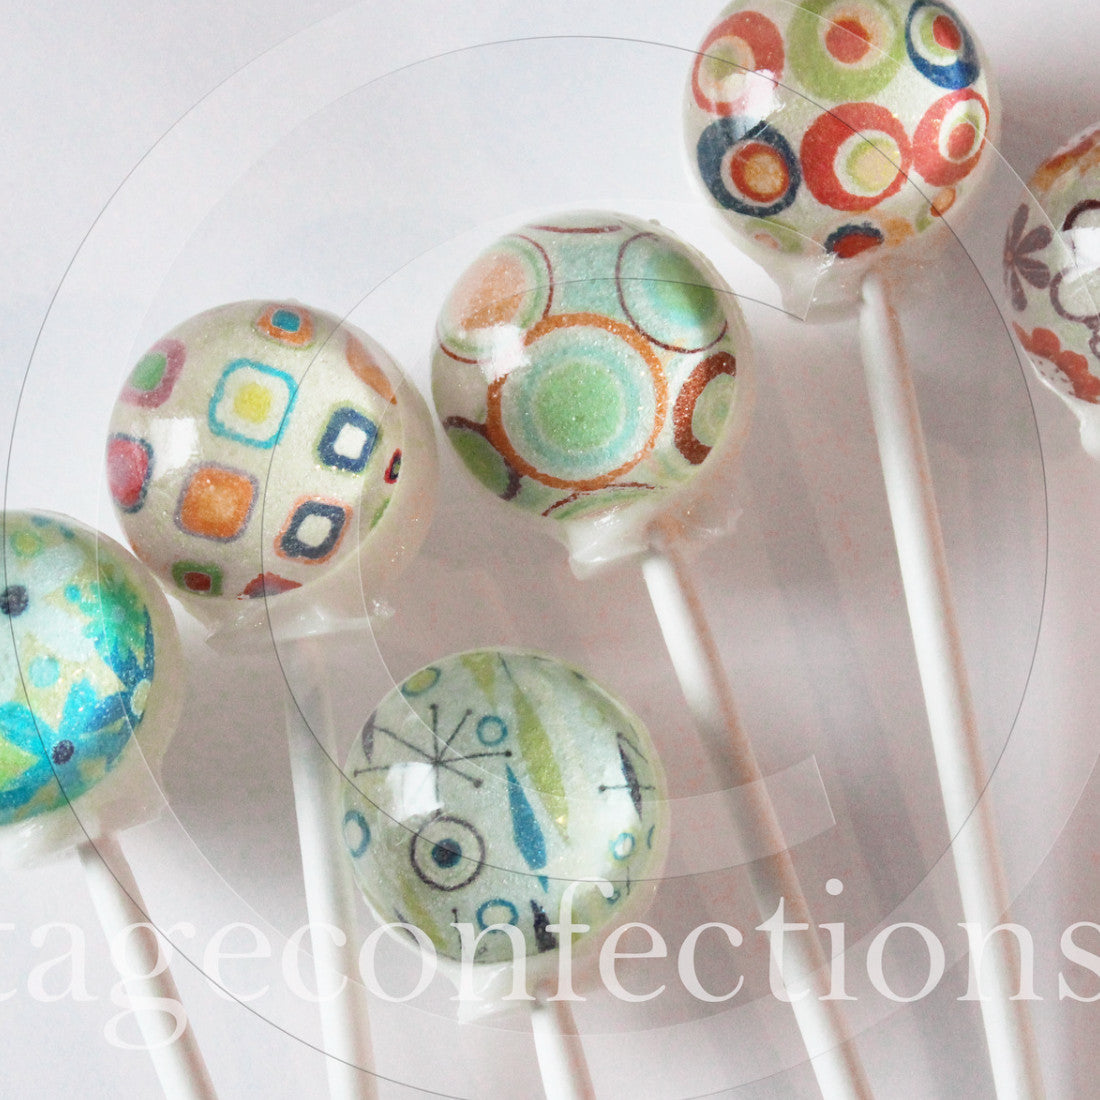 Retro Flower Power Lollipops 6-piece set by I Want Candy!